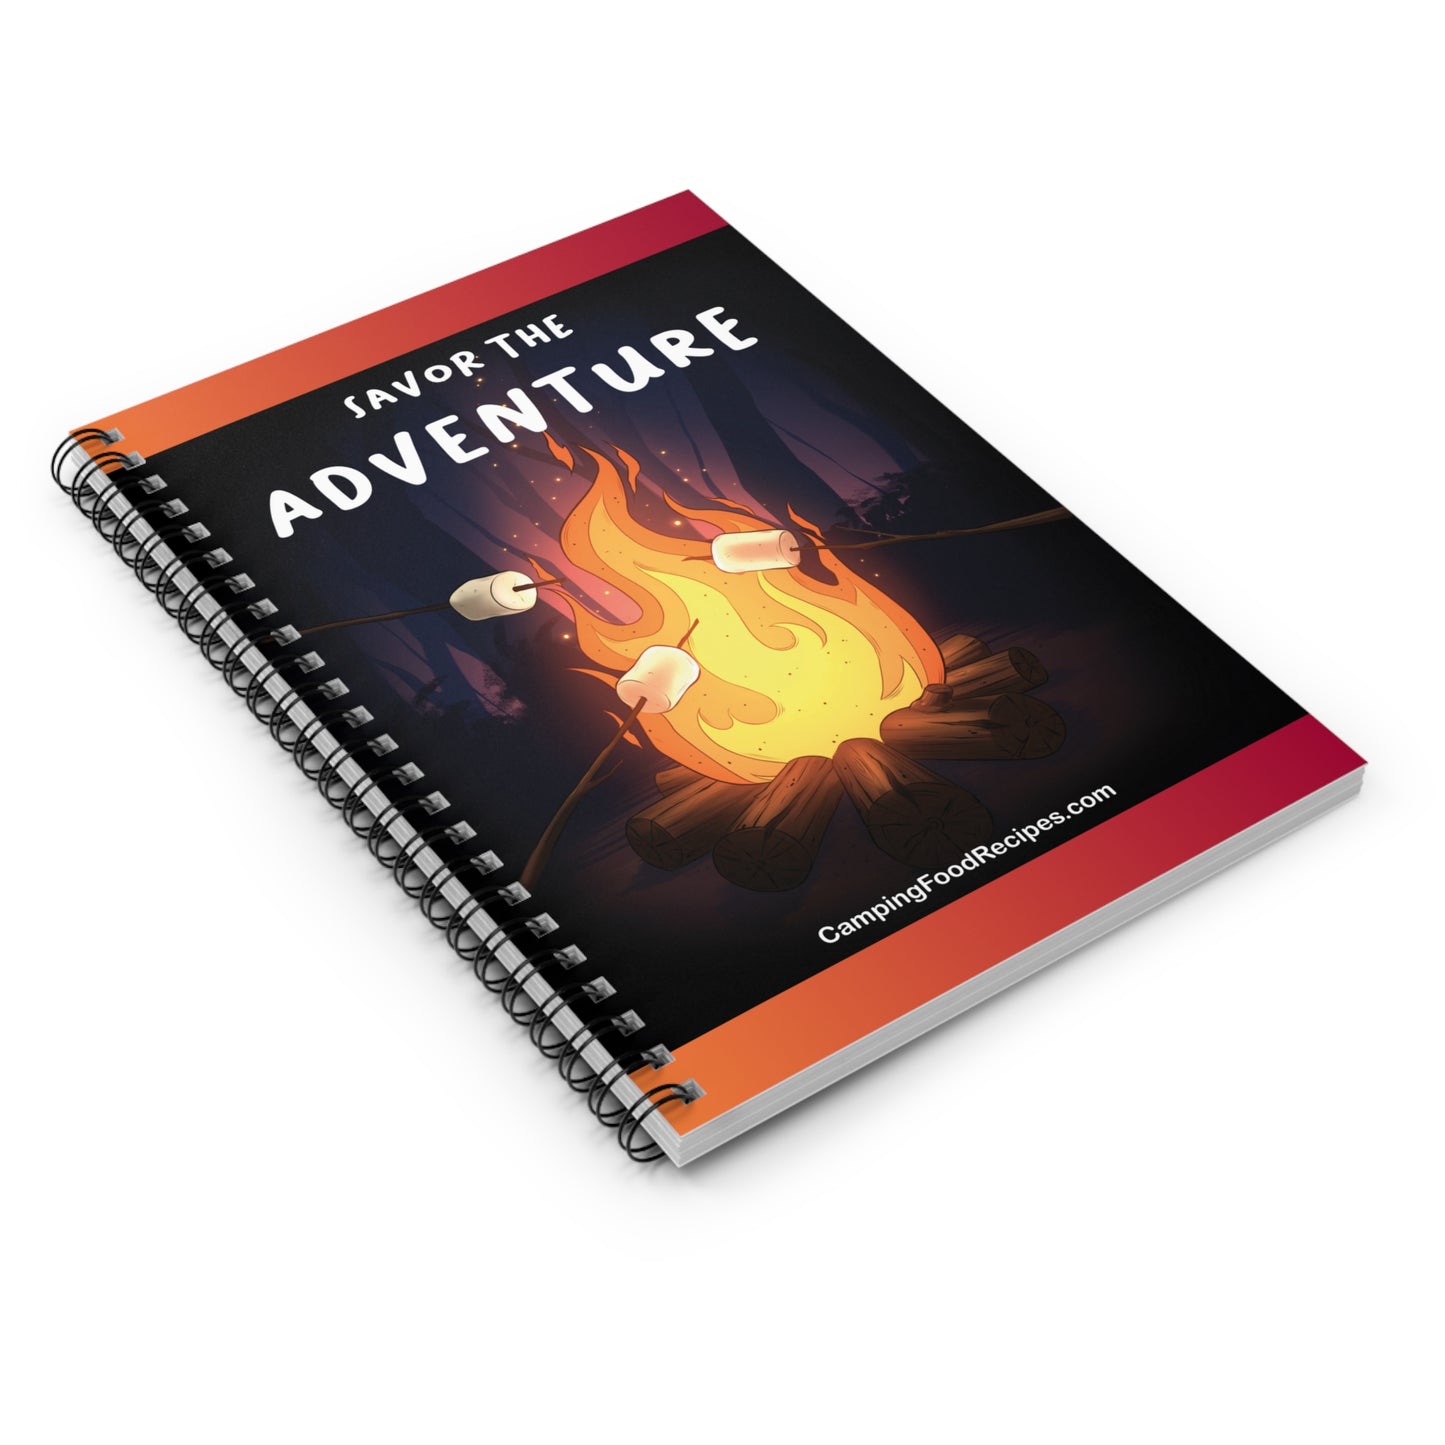 Savor the Adventure - Spiral Notebook - Ruled Line Interior